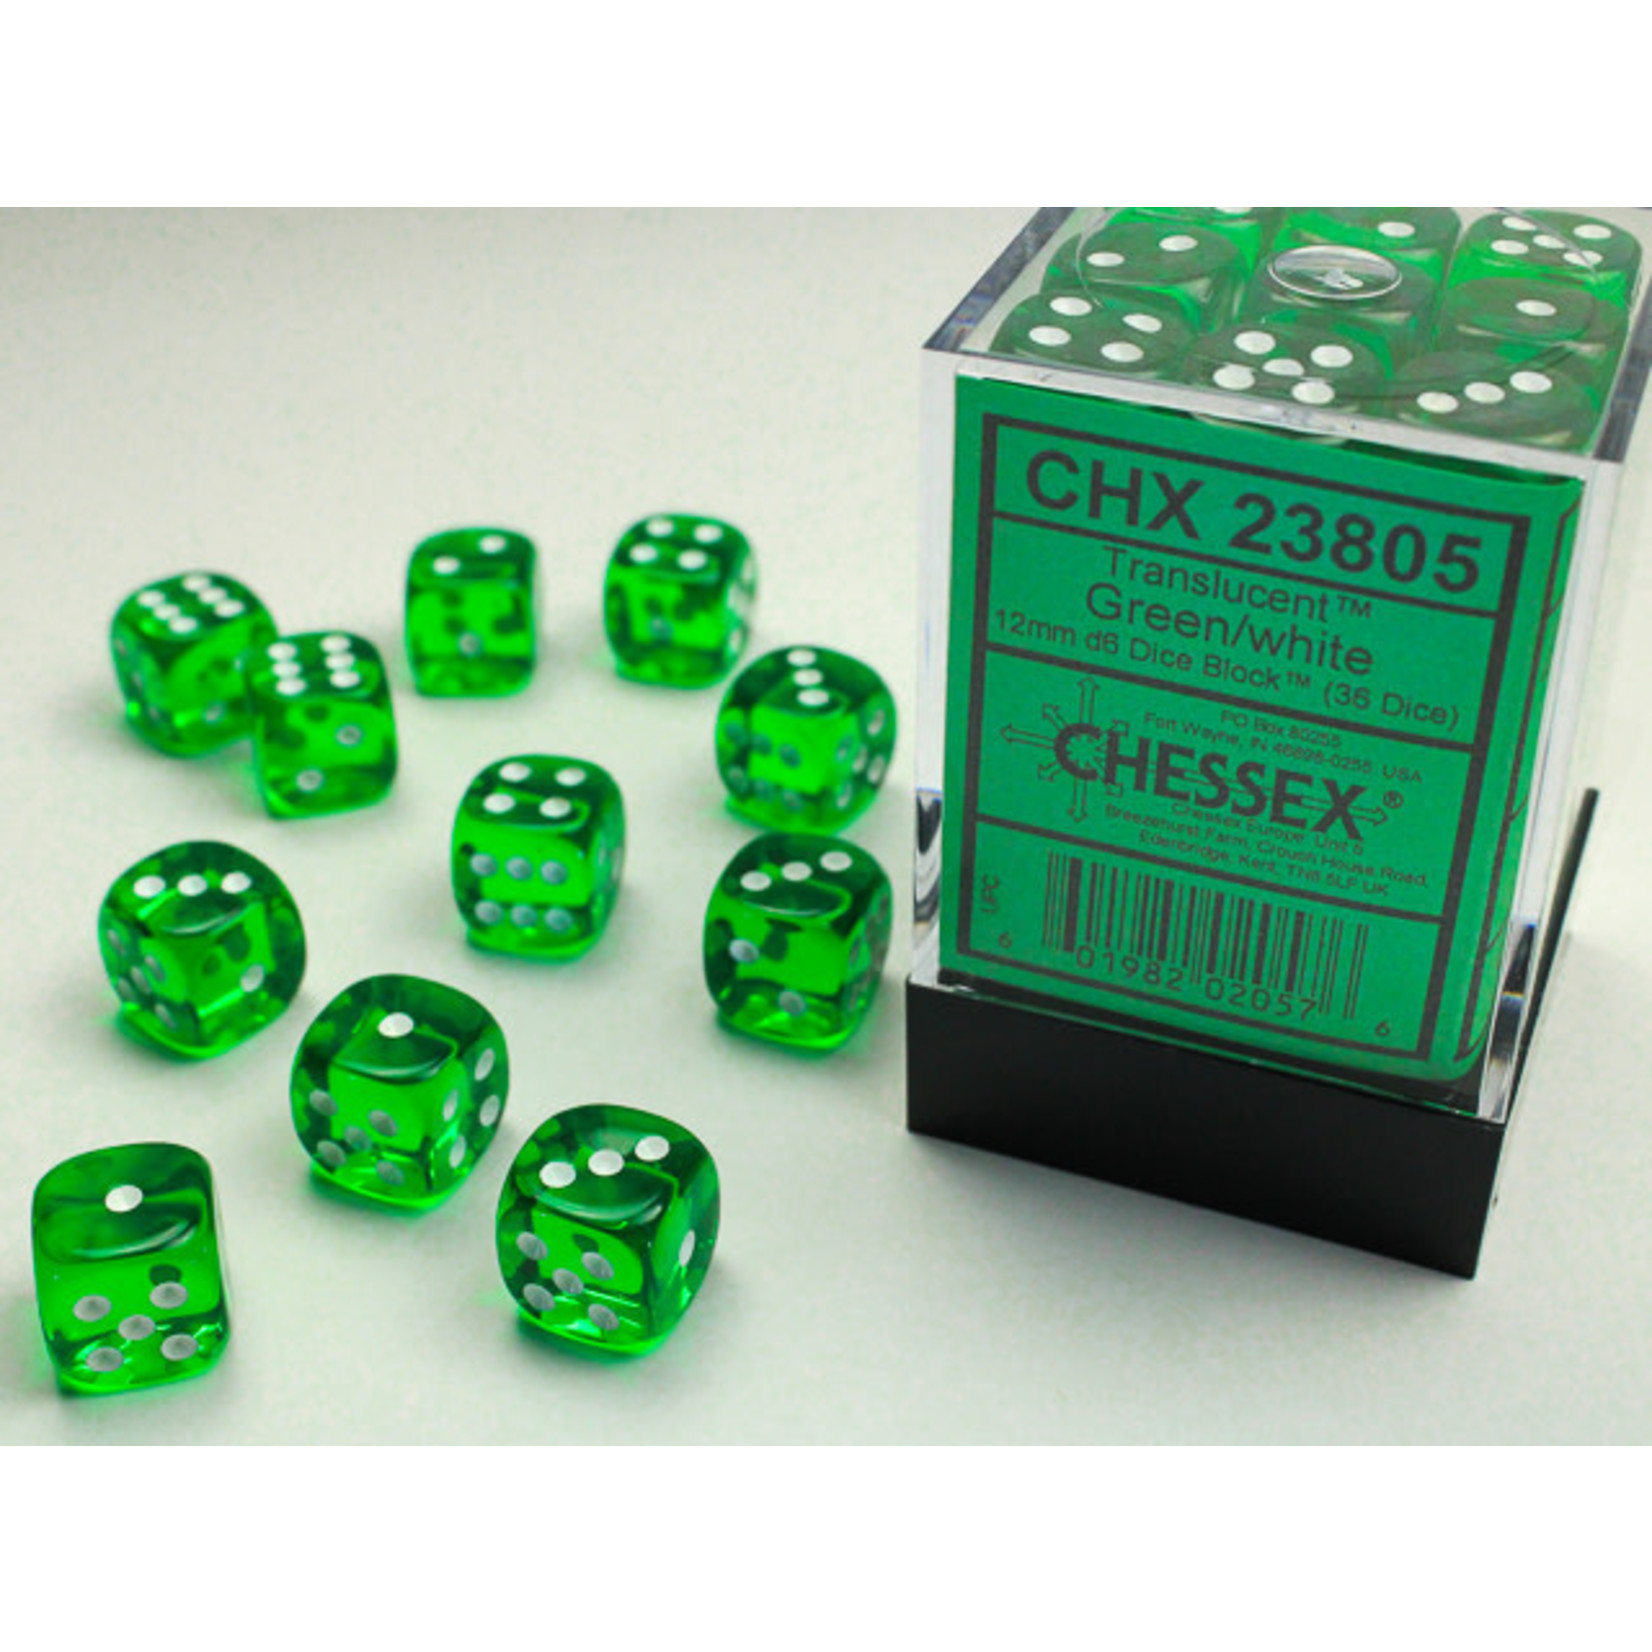 Chessex 23805 Translucent 36pc Green/White Dice